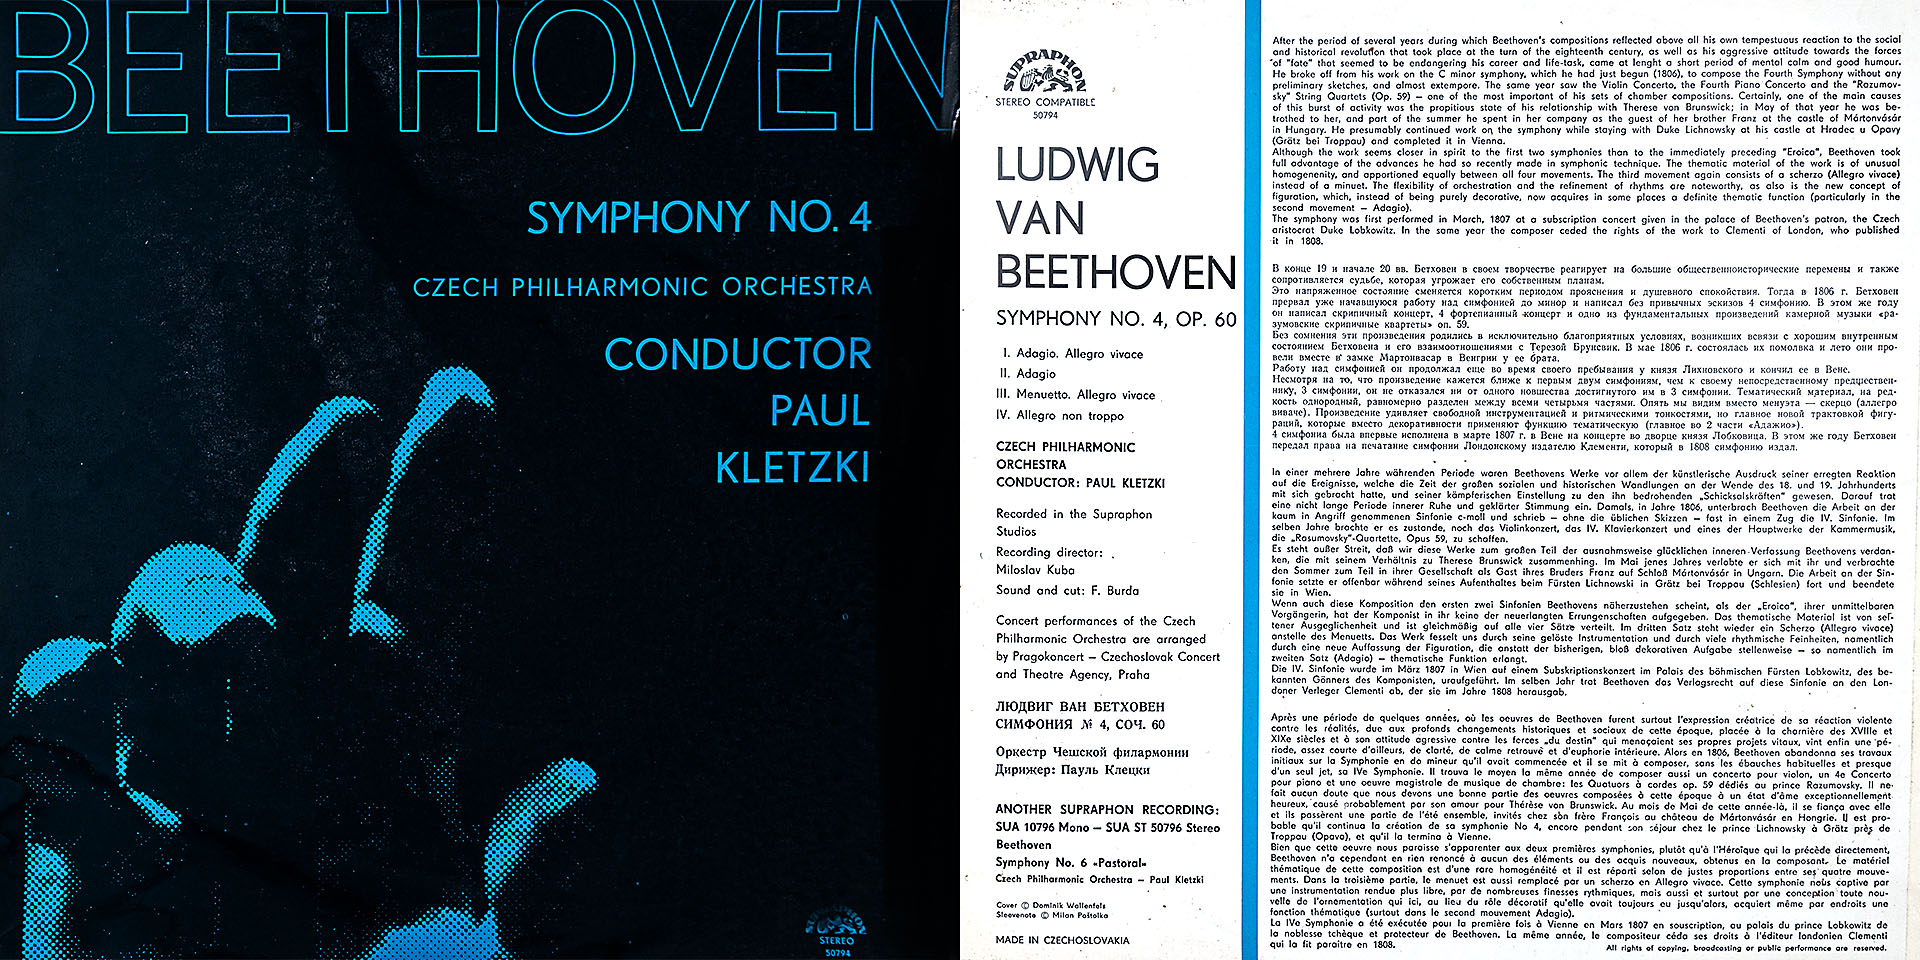 Beethoven - Symphony No. 4 - Czech Philharmonic Orchersta, Dirigent Paul Kletzki